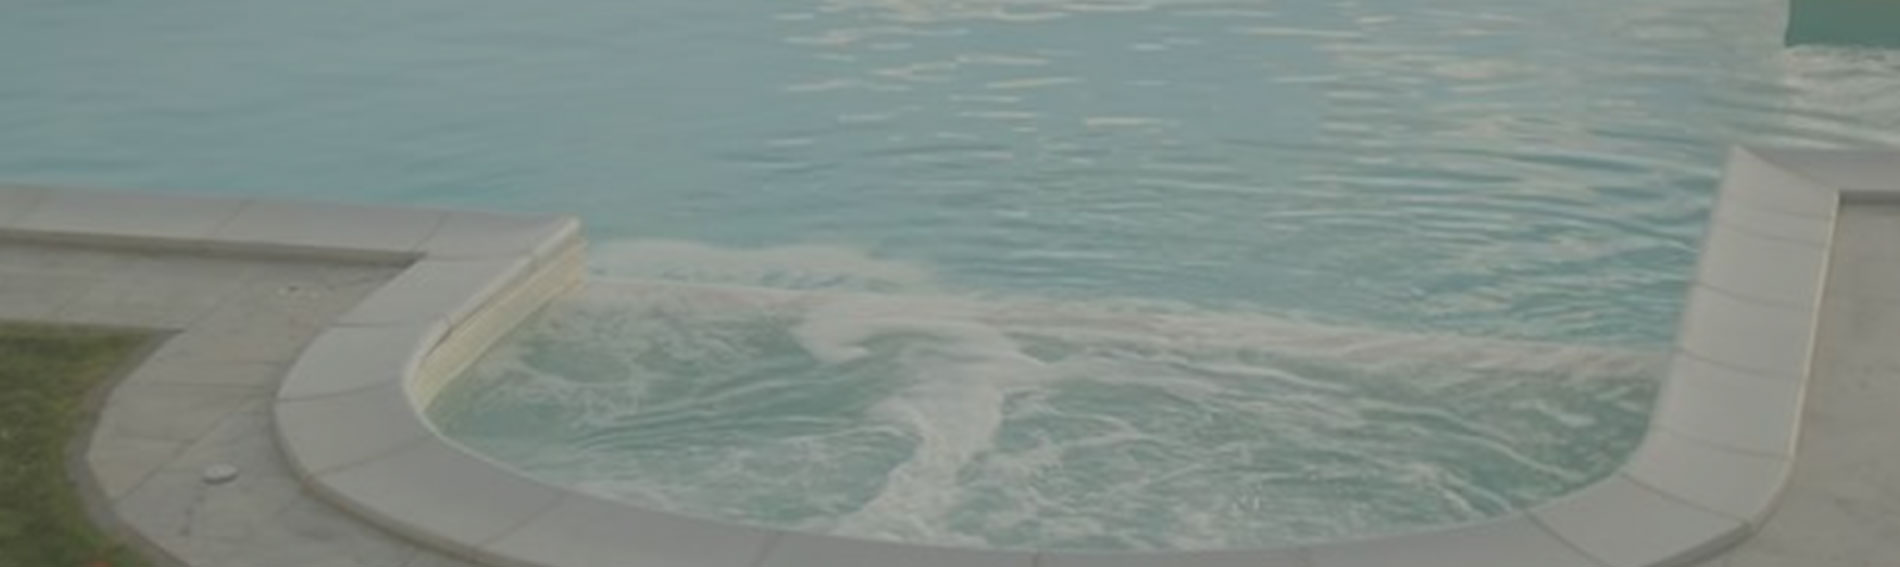 slide piscina idromassaggio acquafer